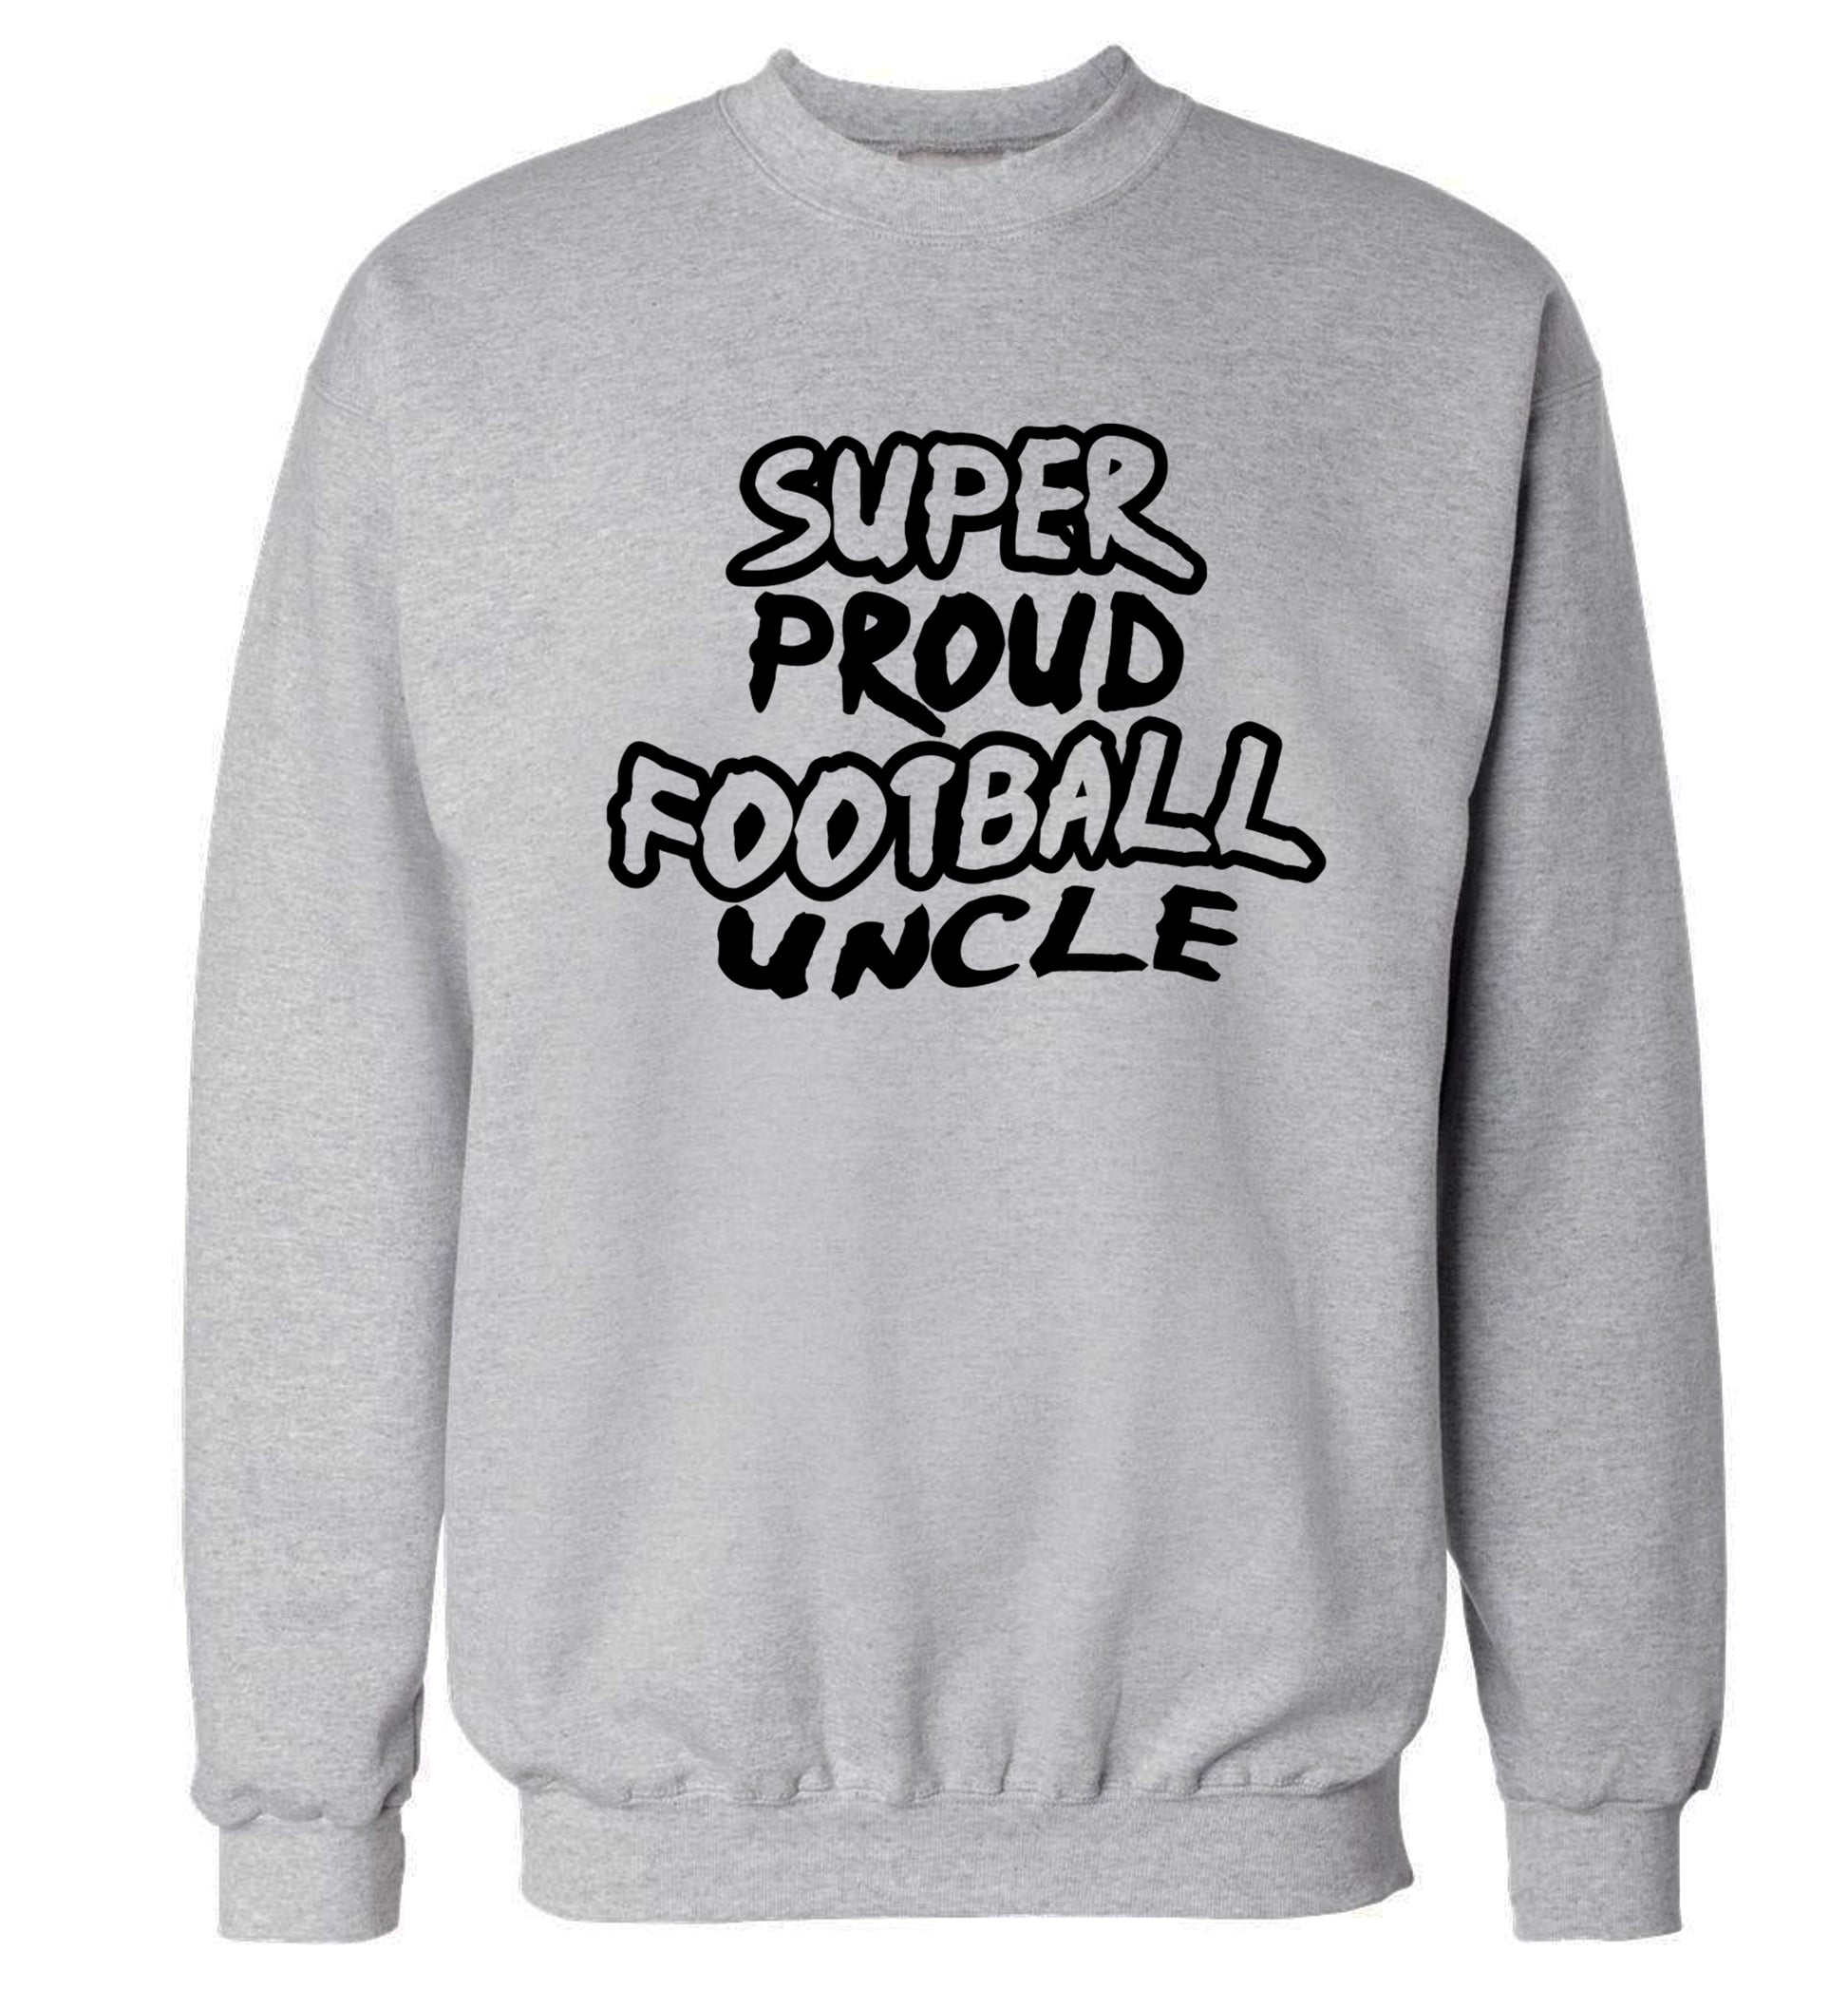 Super proud football uncle Adult's unisexgrey Sweater 2XL